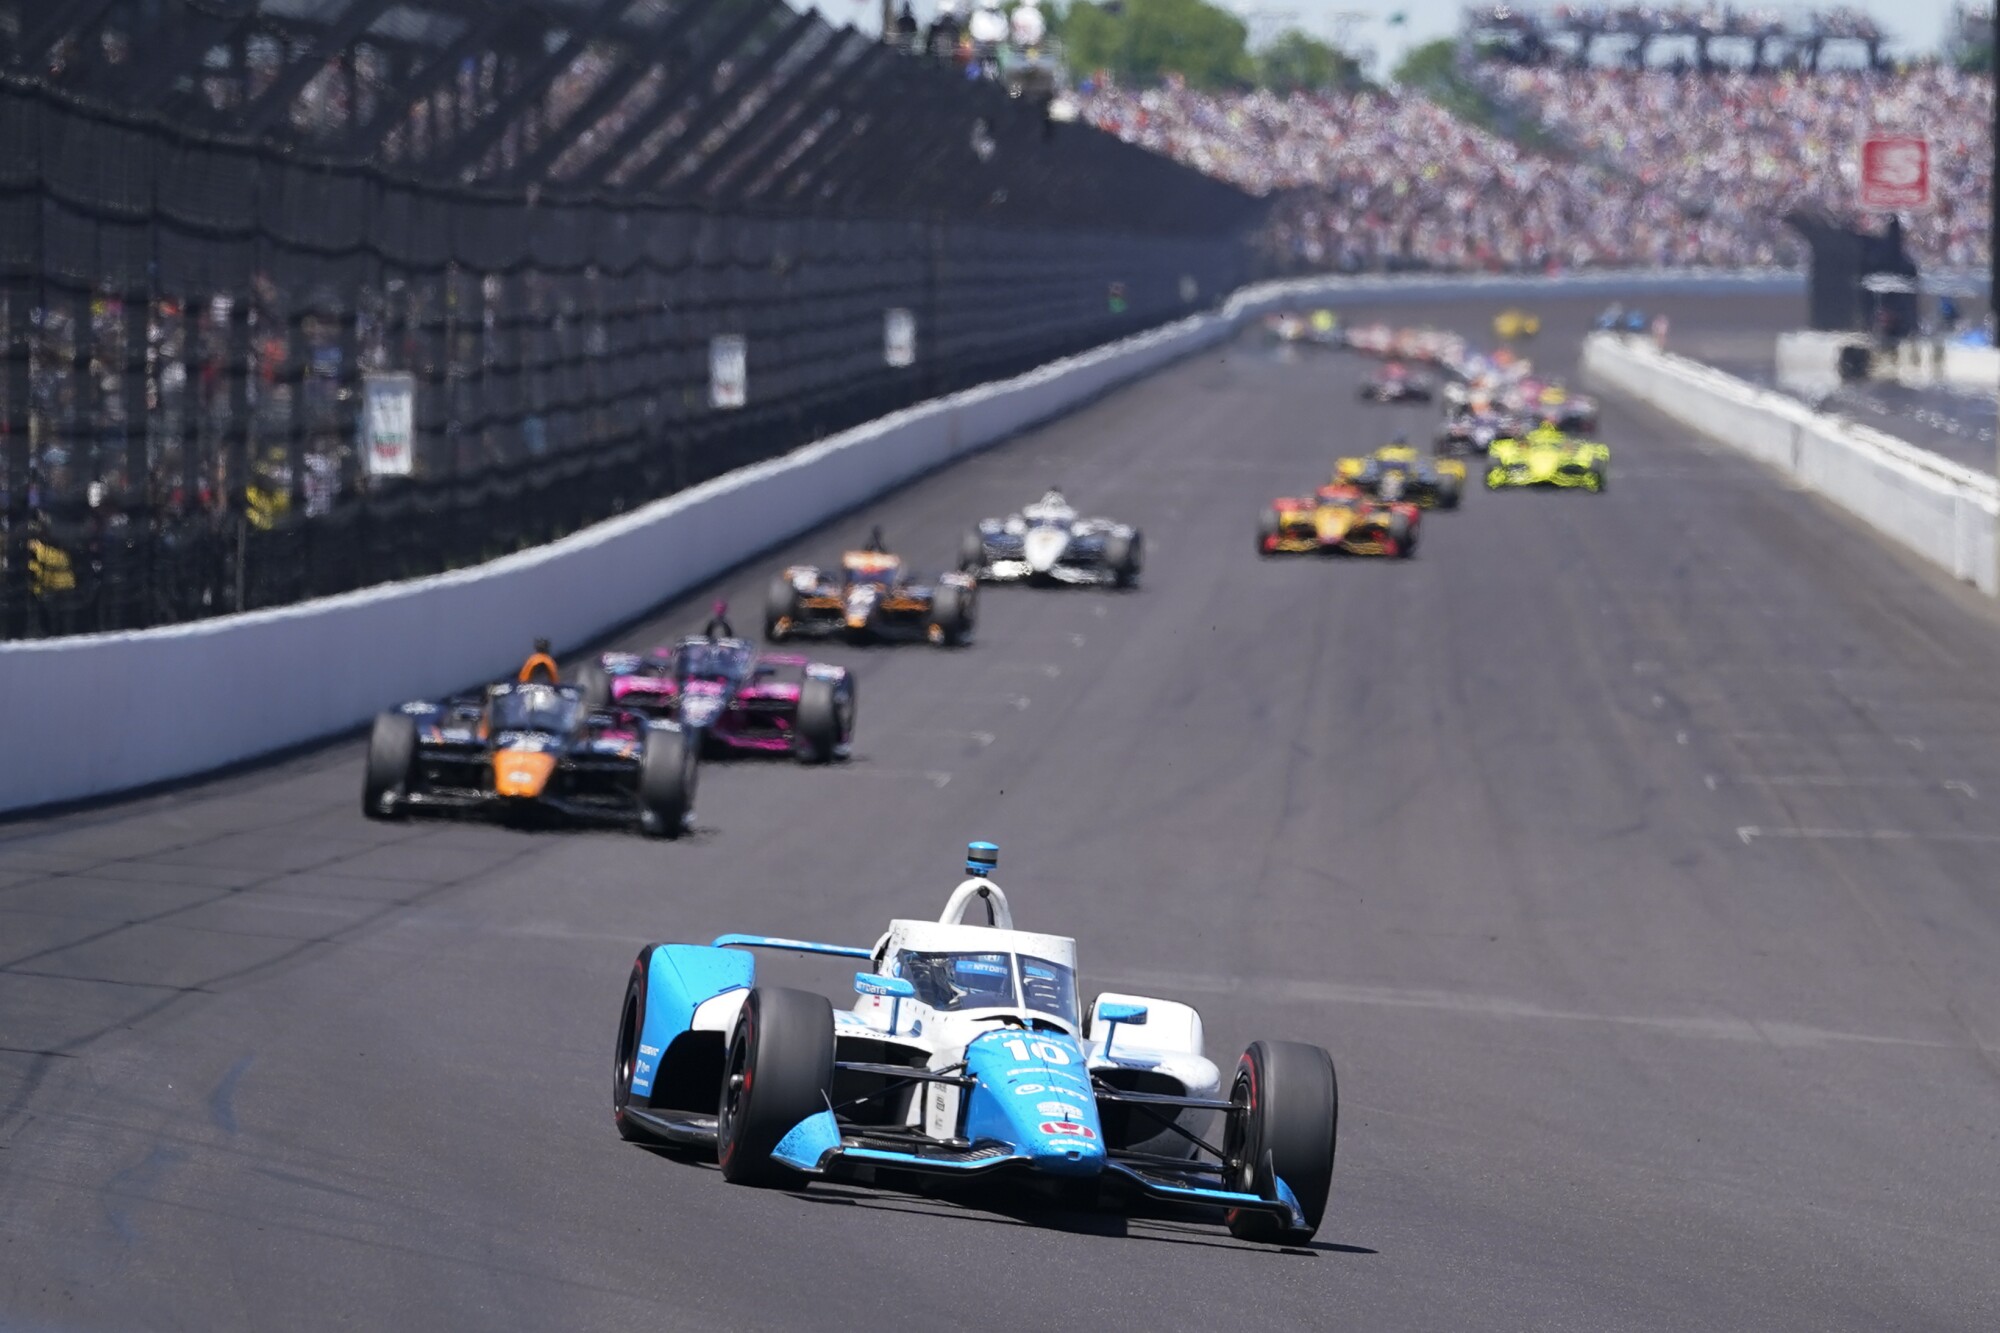 Alex Palou navigates into Turn 1 during Indianapolis 500 2021.